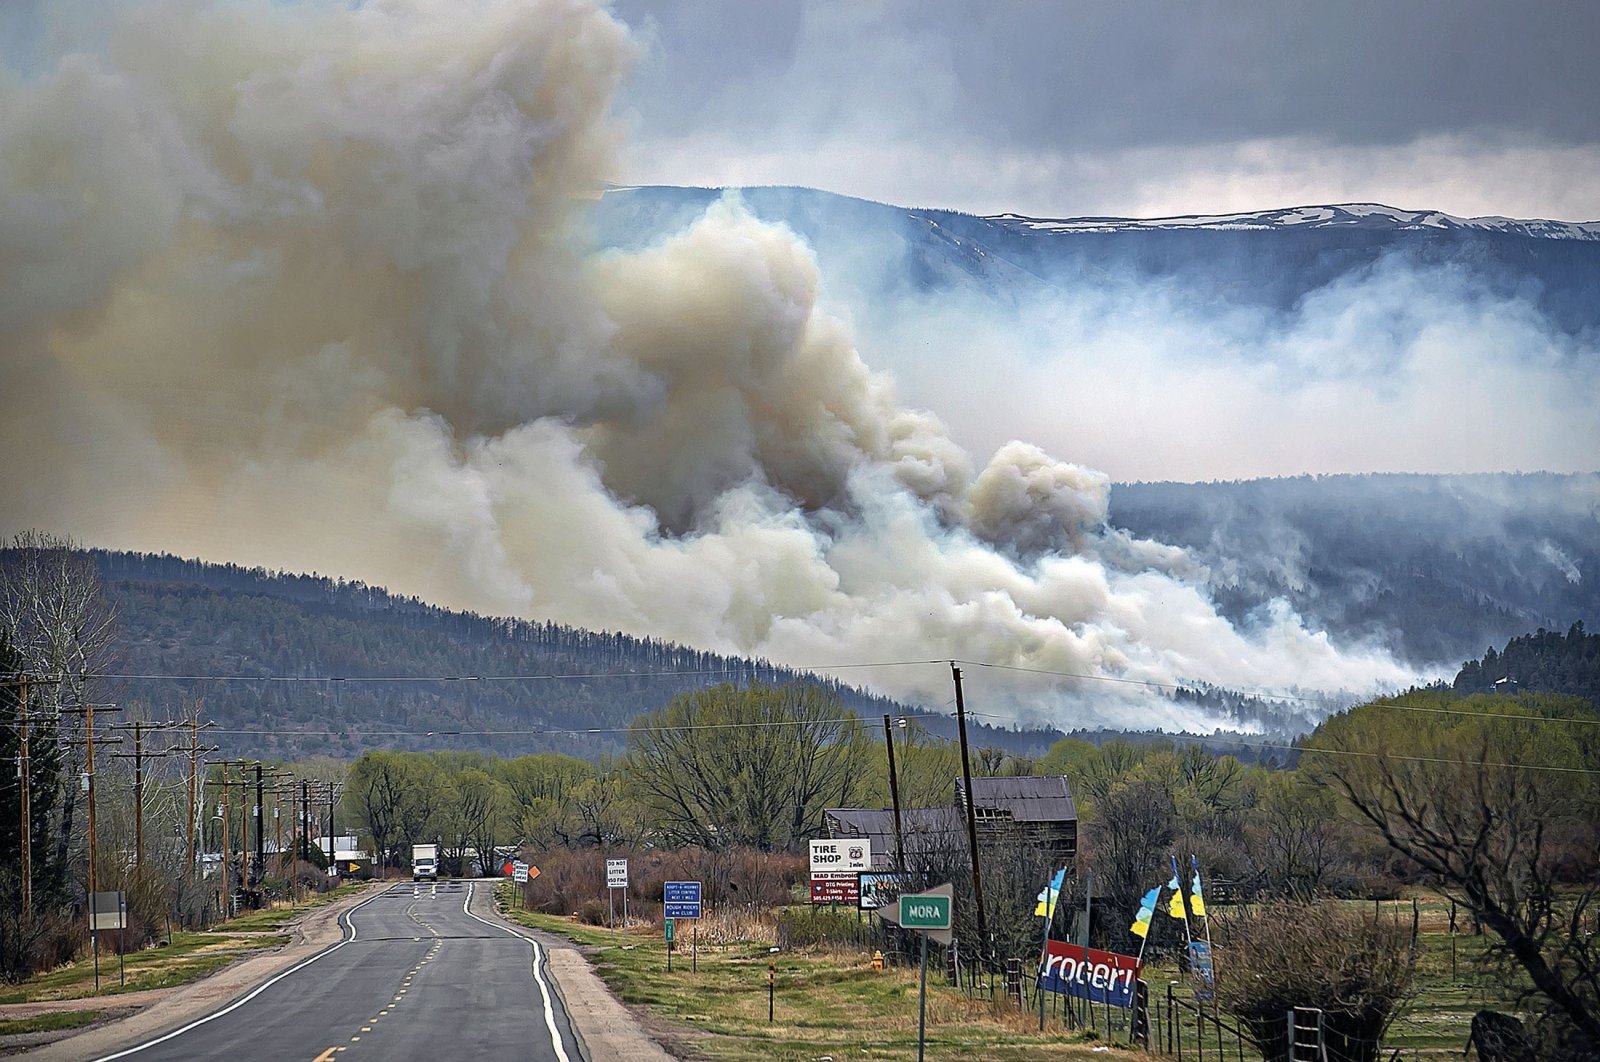 Kemarahan atas kebakaran hutan terbesar di New Mexico yang dipicu oleh pemerintah